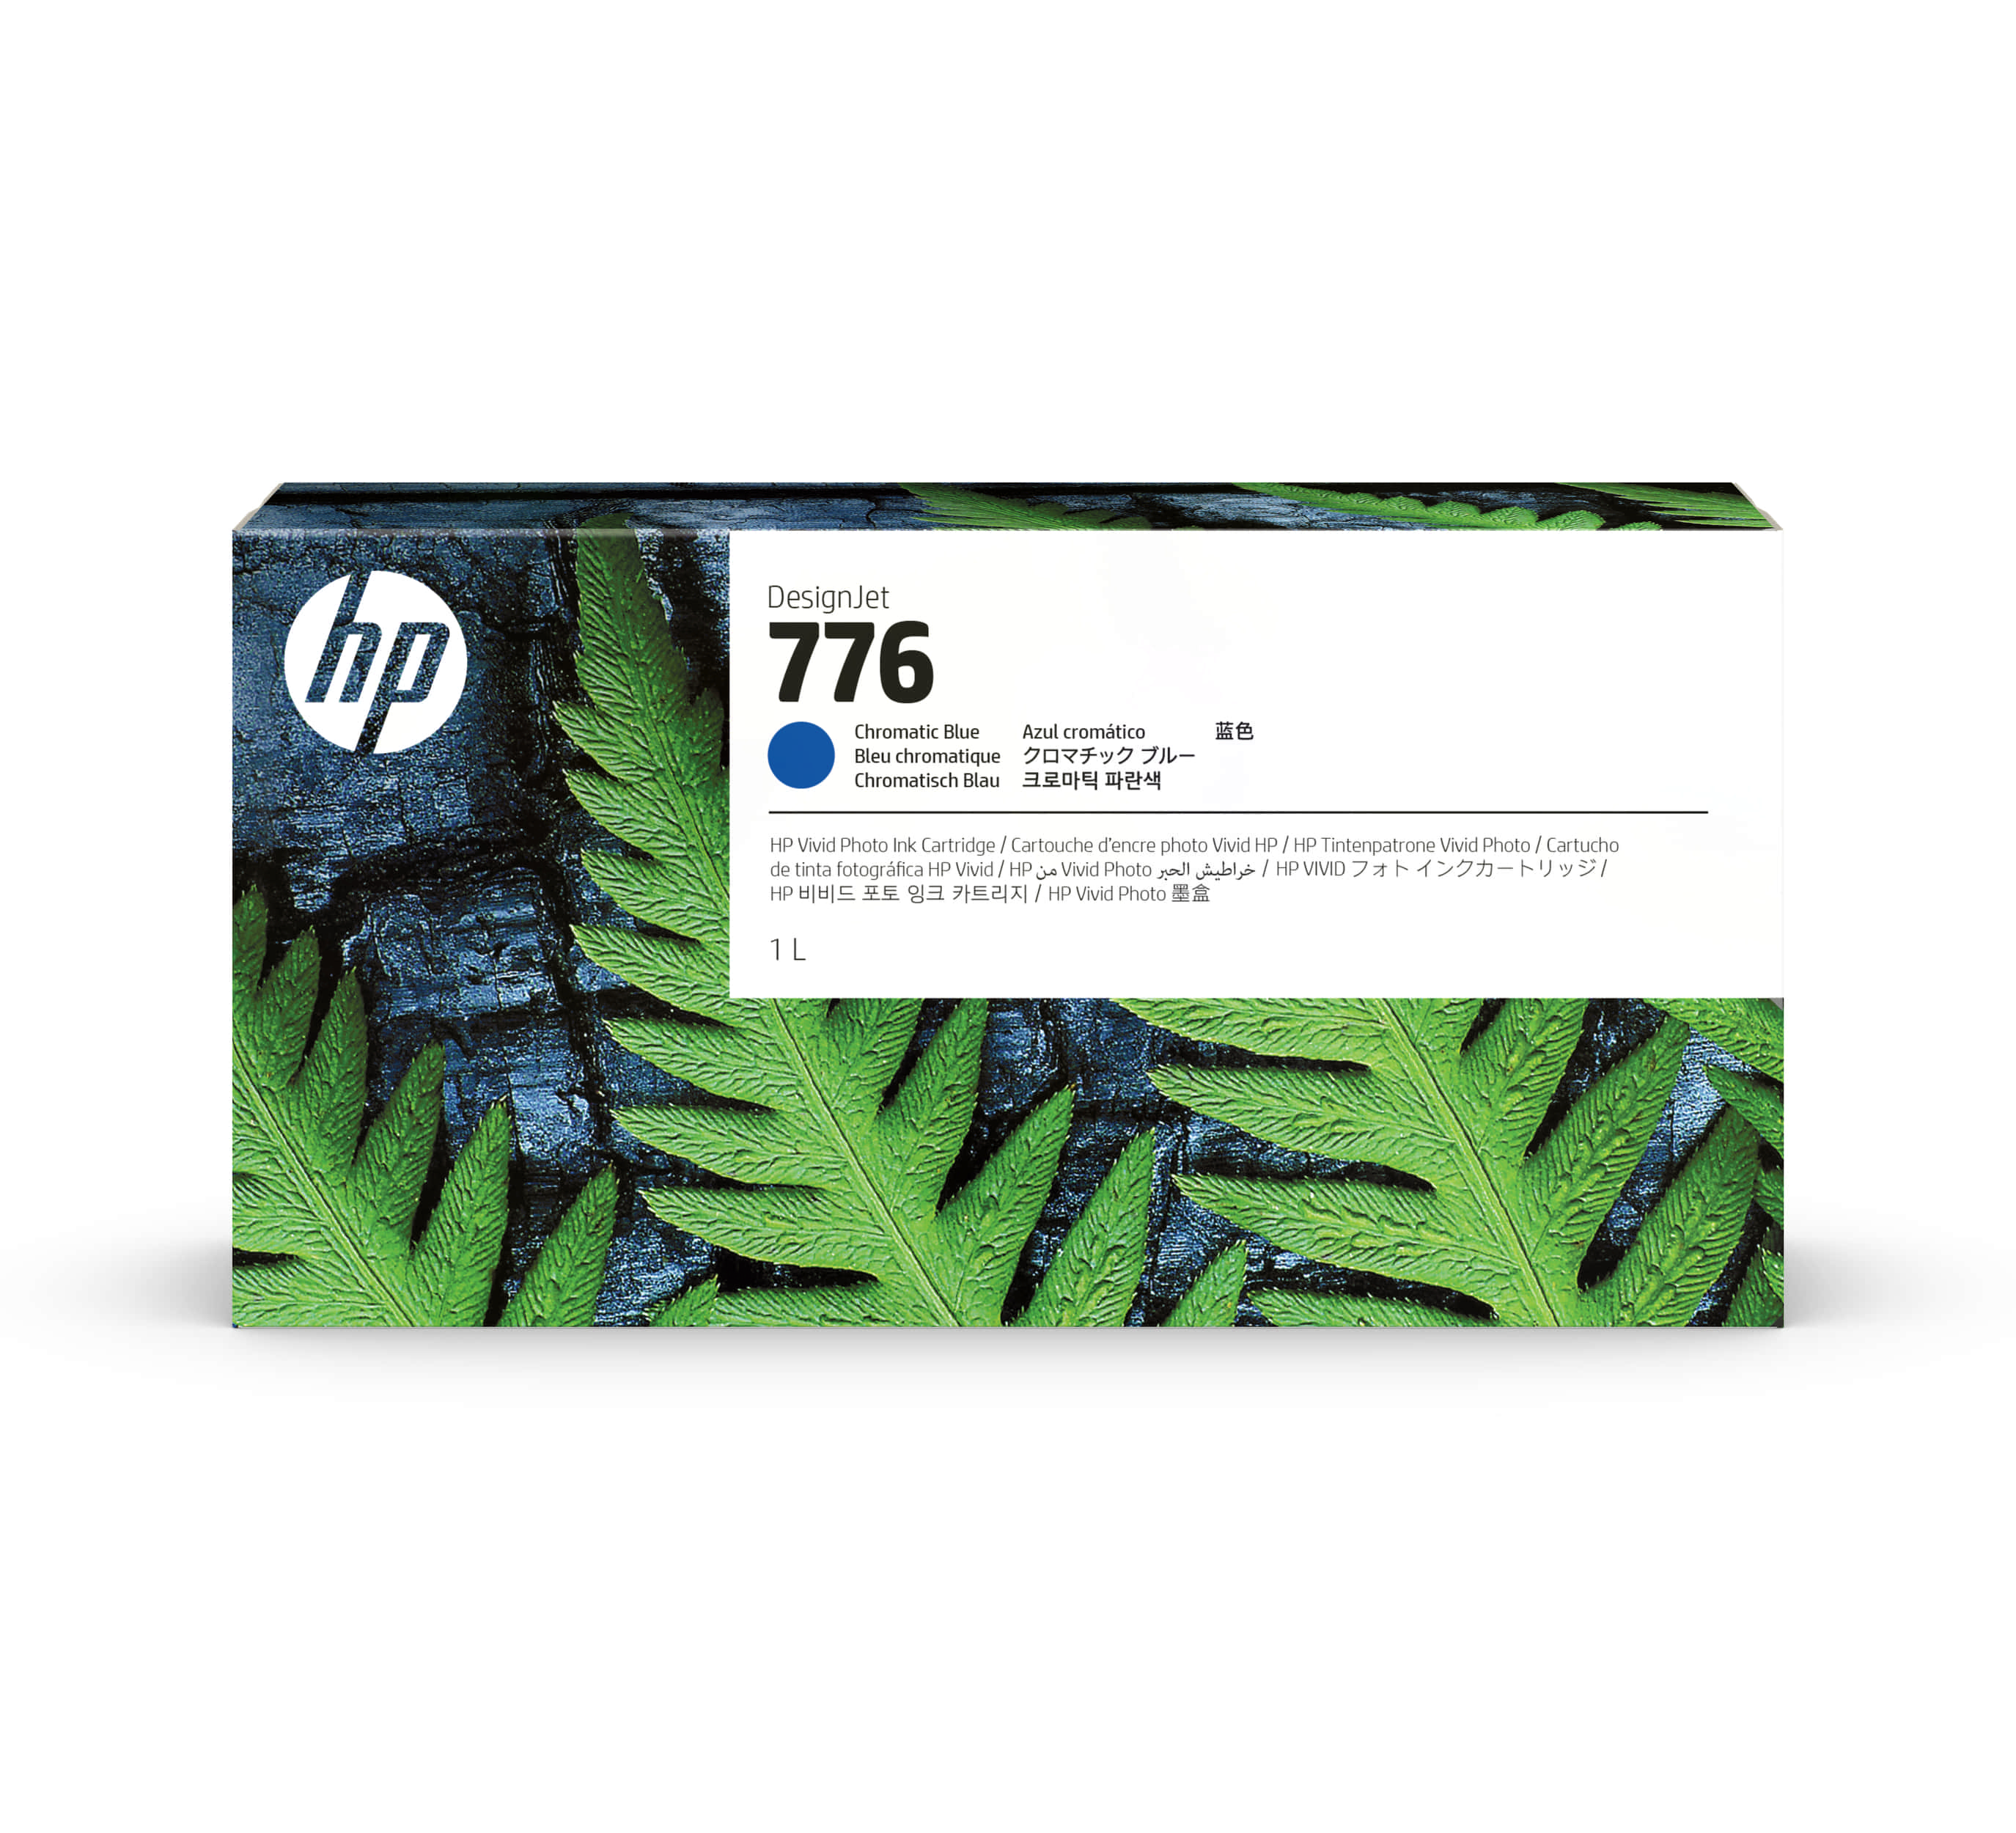 HP 776 Original Tinte chromatic blau - 1000 ml